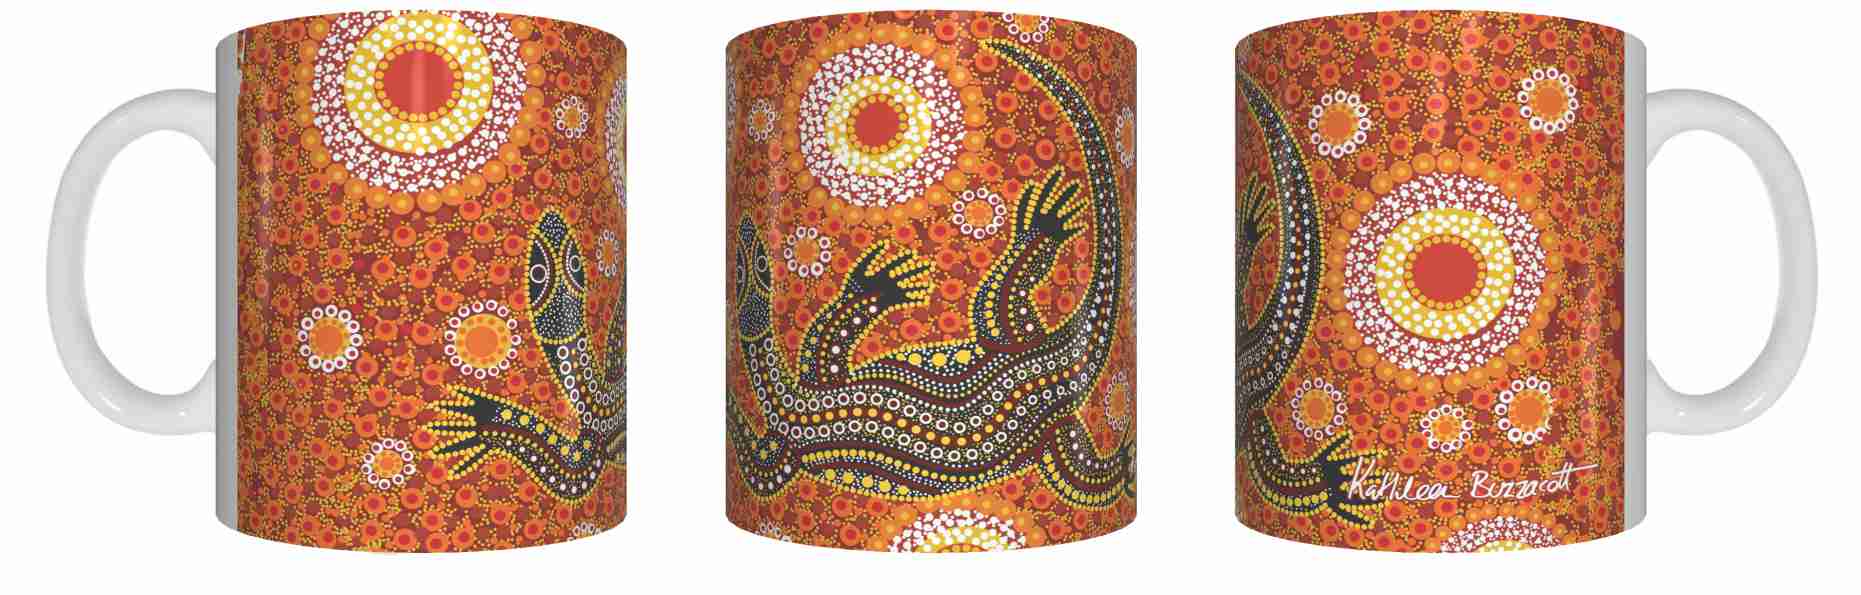 Sand Goanna - Aboriginal Design Ceramic Mug in Gift Box